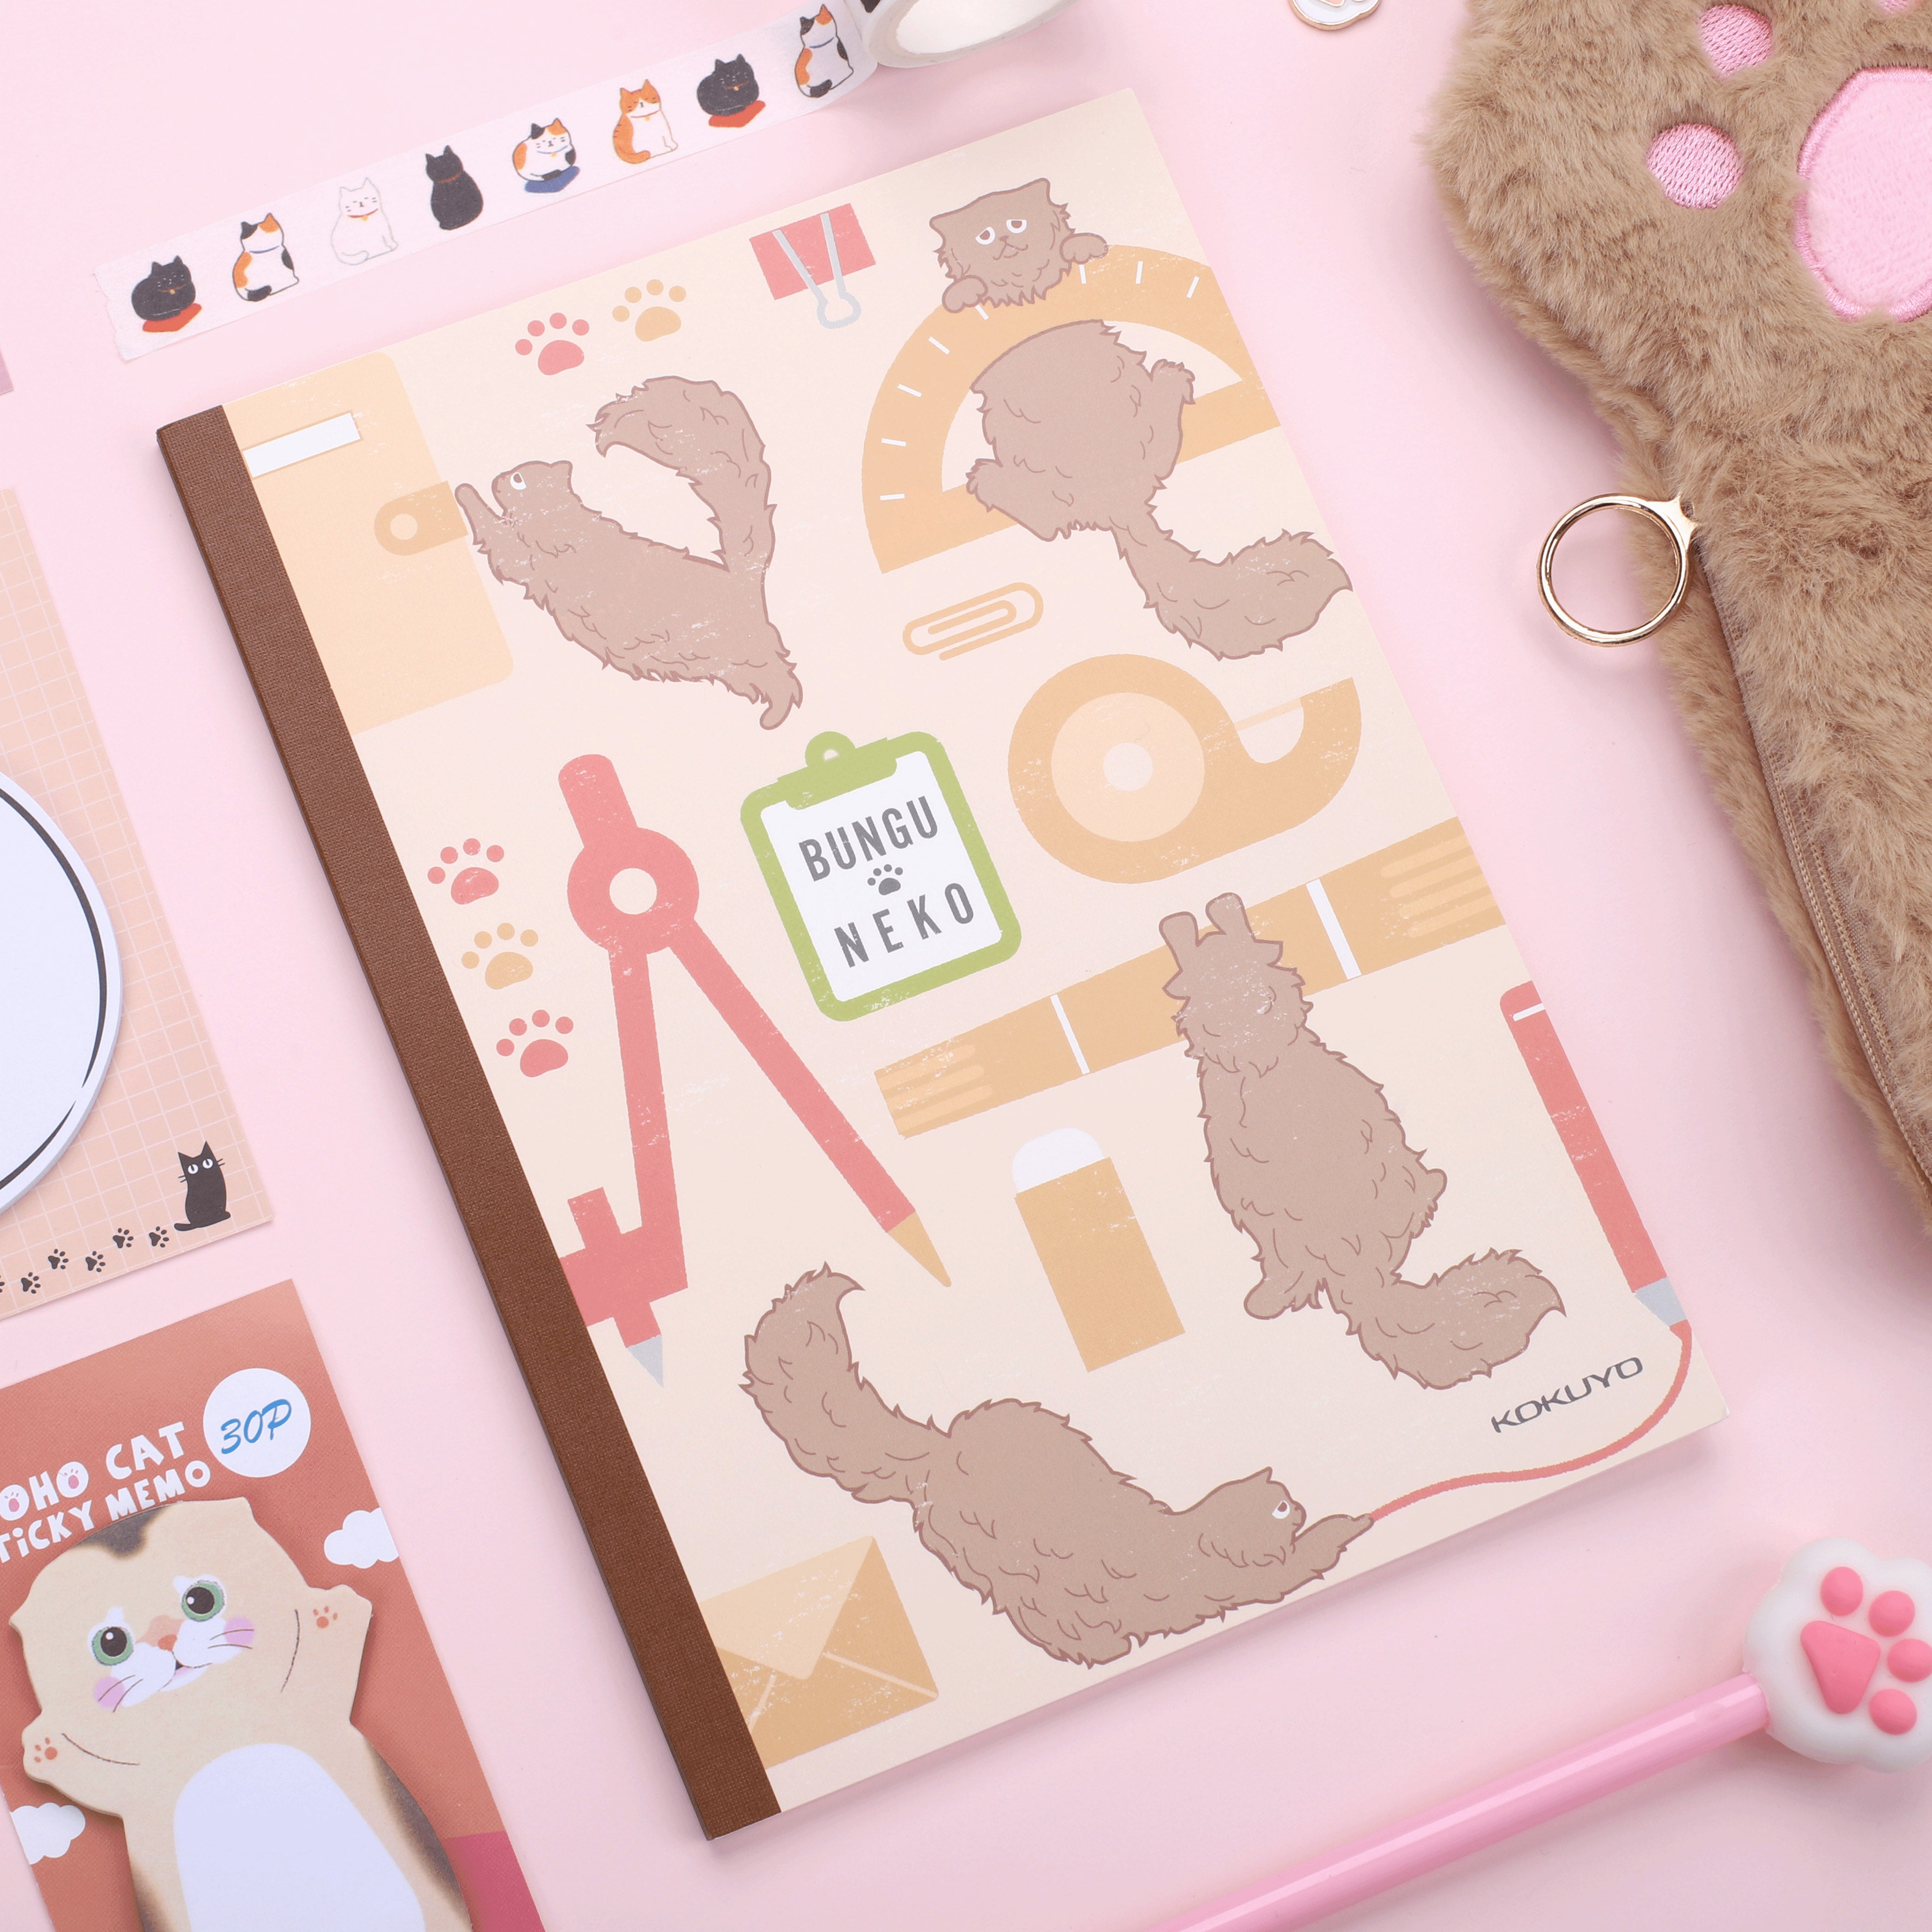 Cat, Cat Notebook, Cat Journal, Cat and Butterfly, Pink Journal